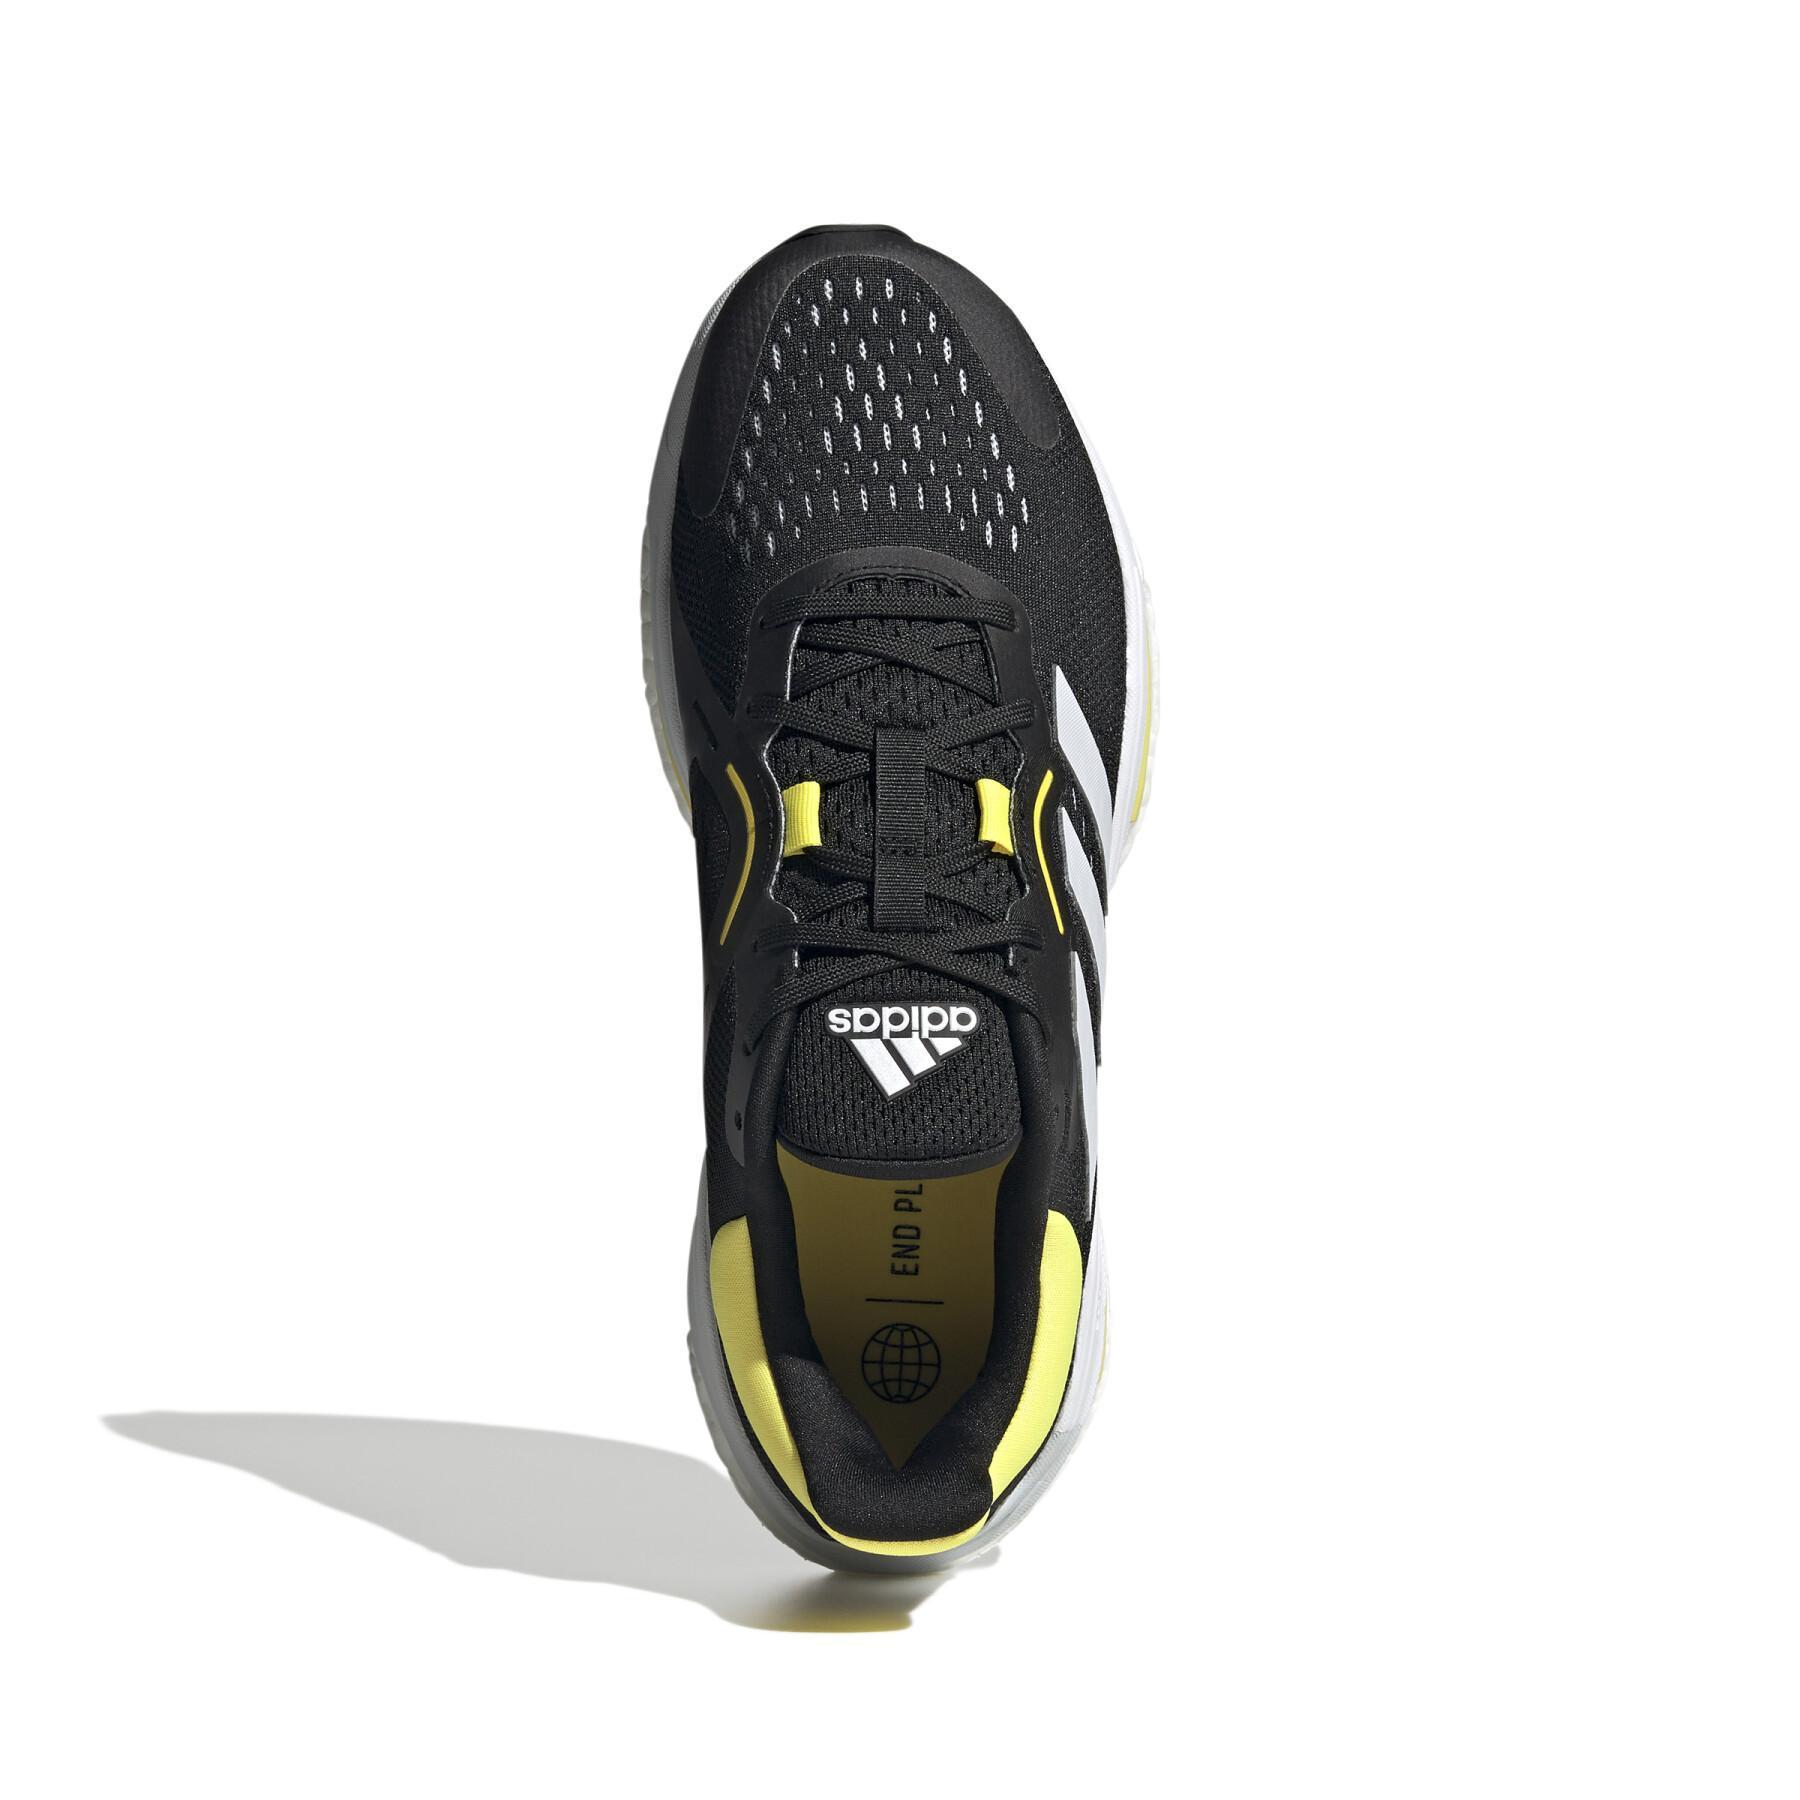 Running shoes adidas Solarcontrol